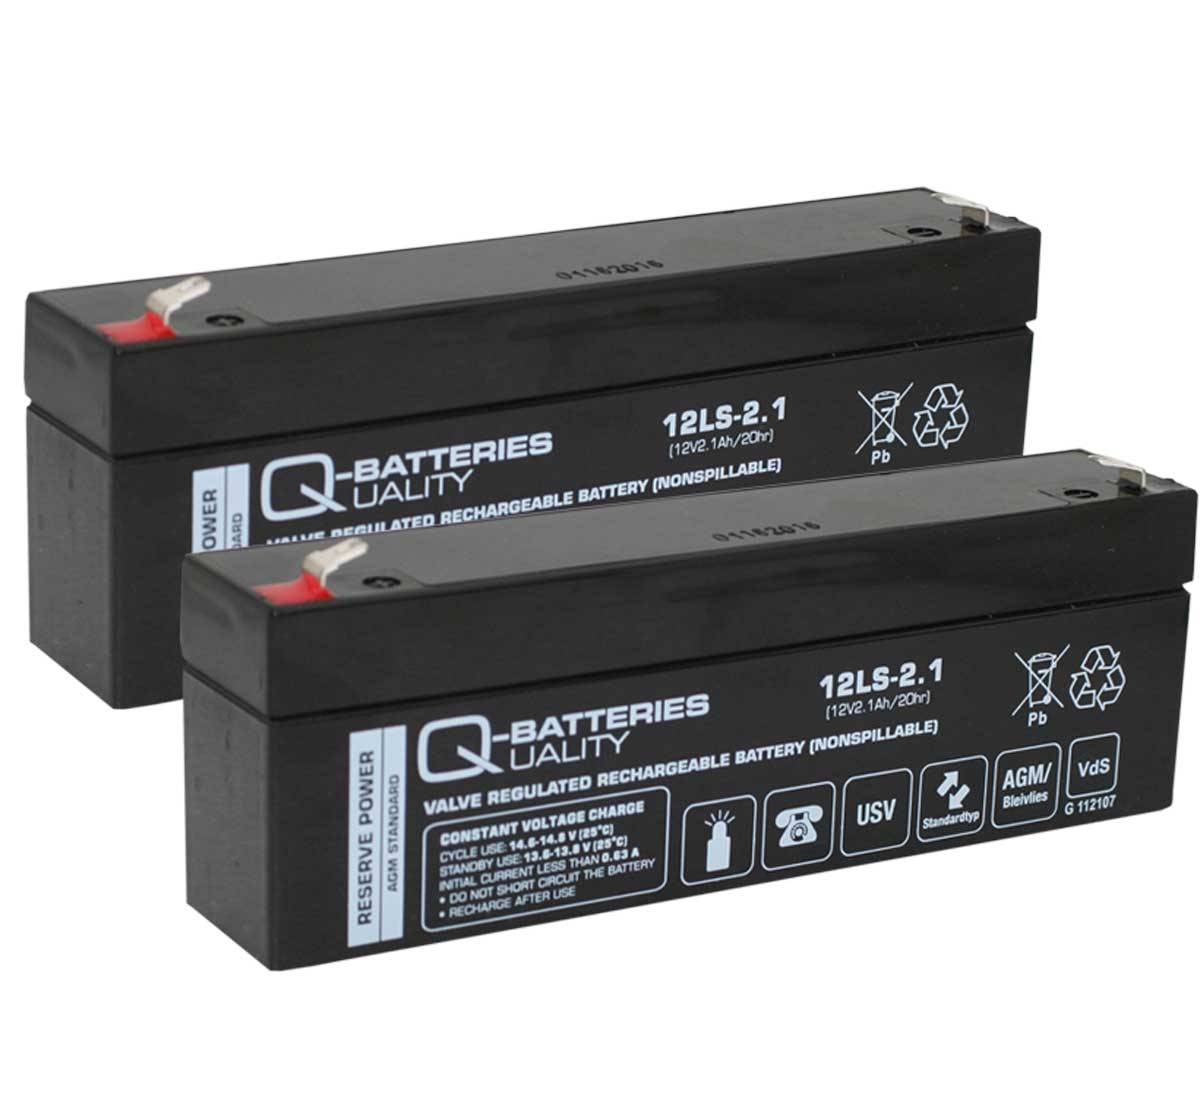 Q-Batteries Ersatzakku für Badewannenlifter und Patientenlifter 24V 2,1Ah (2 x 12V) 